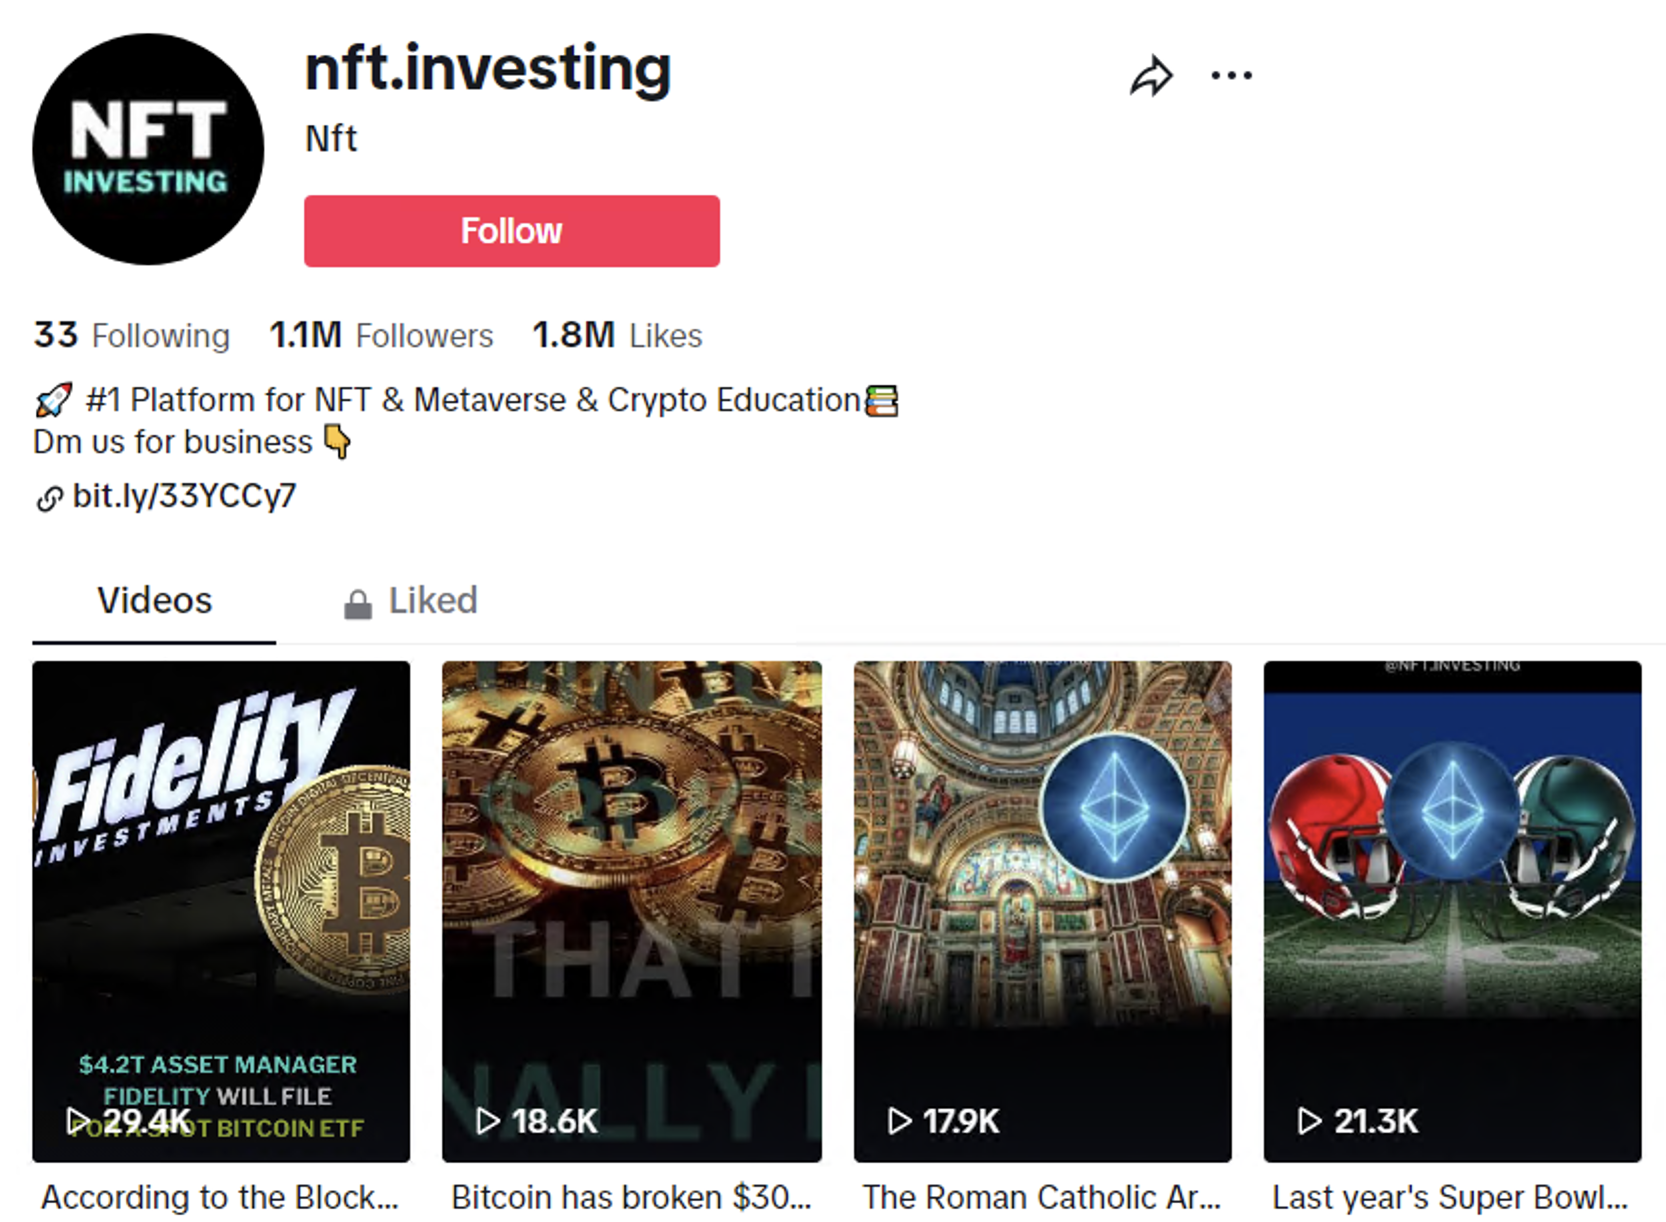 @nft.investing